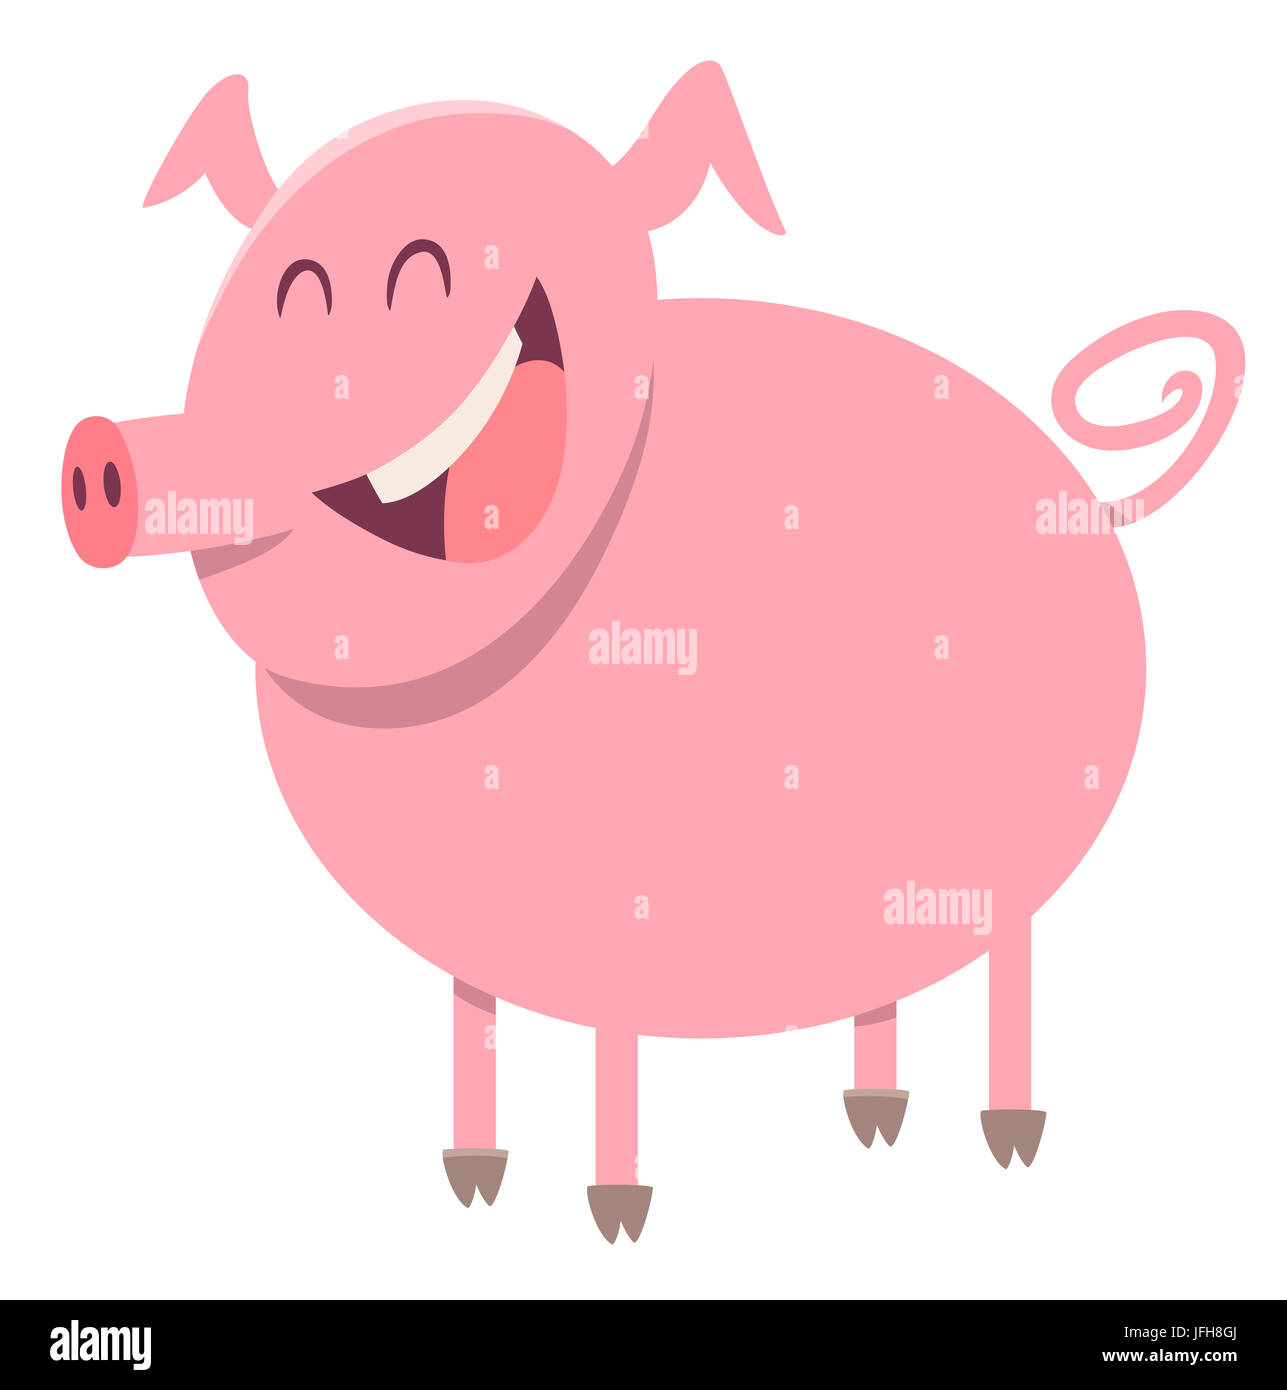 pig farm animal character Stock Photo